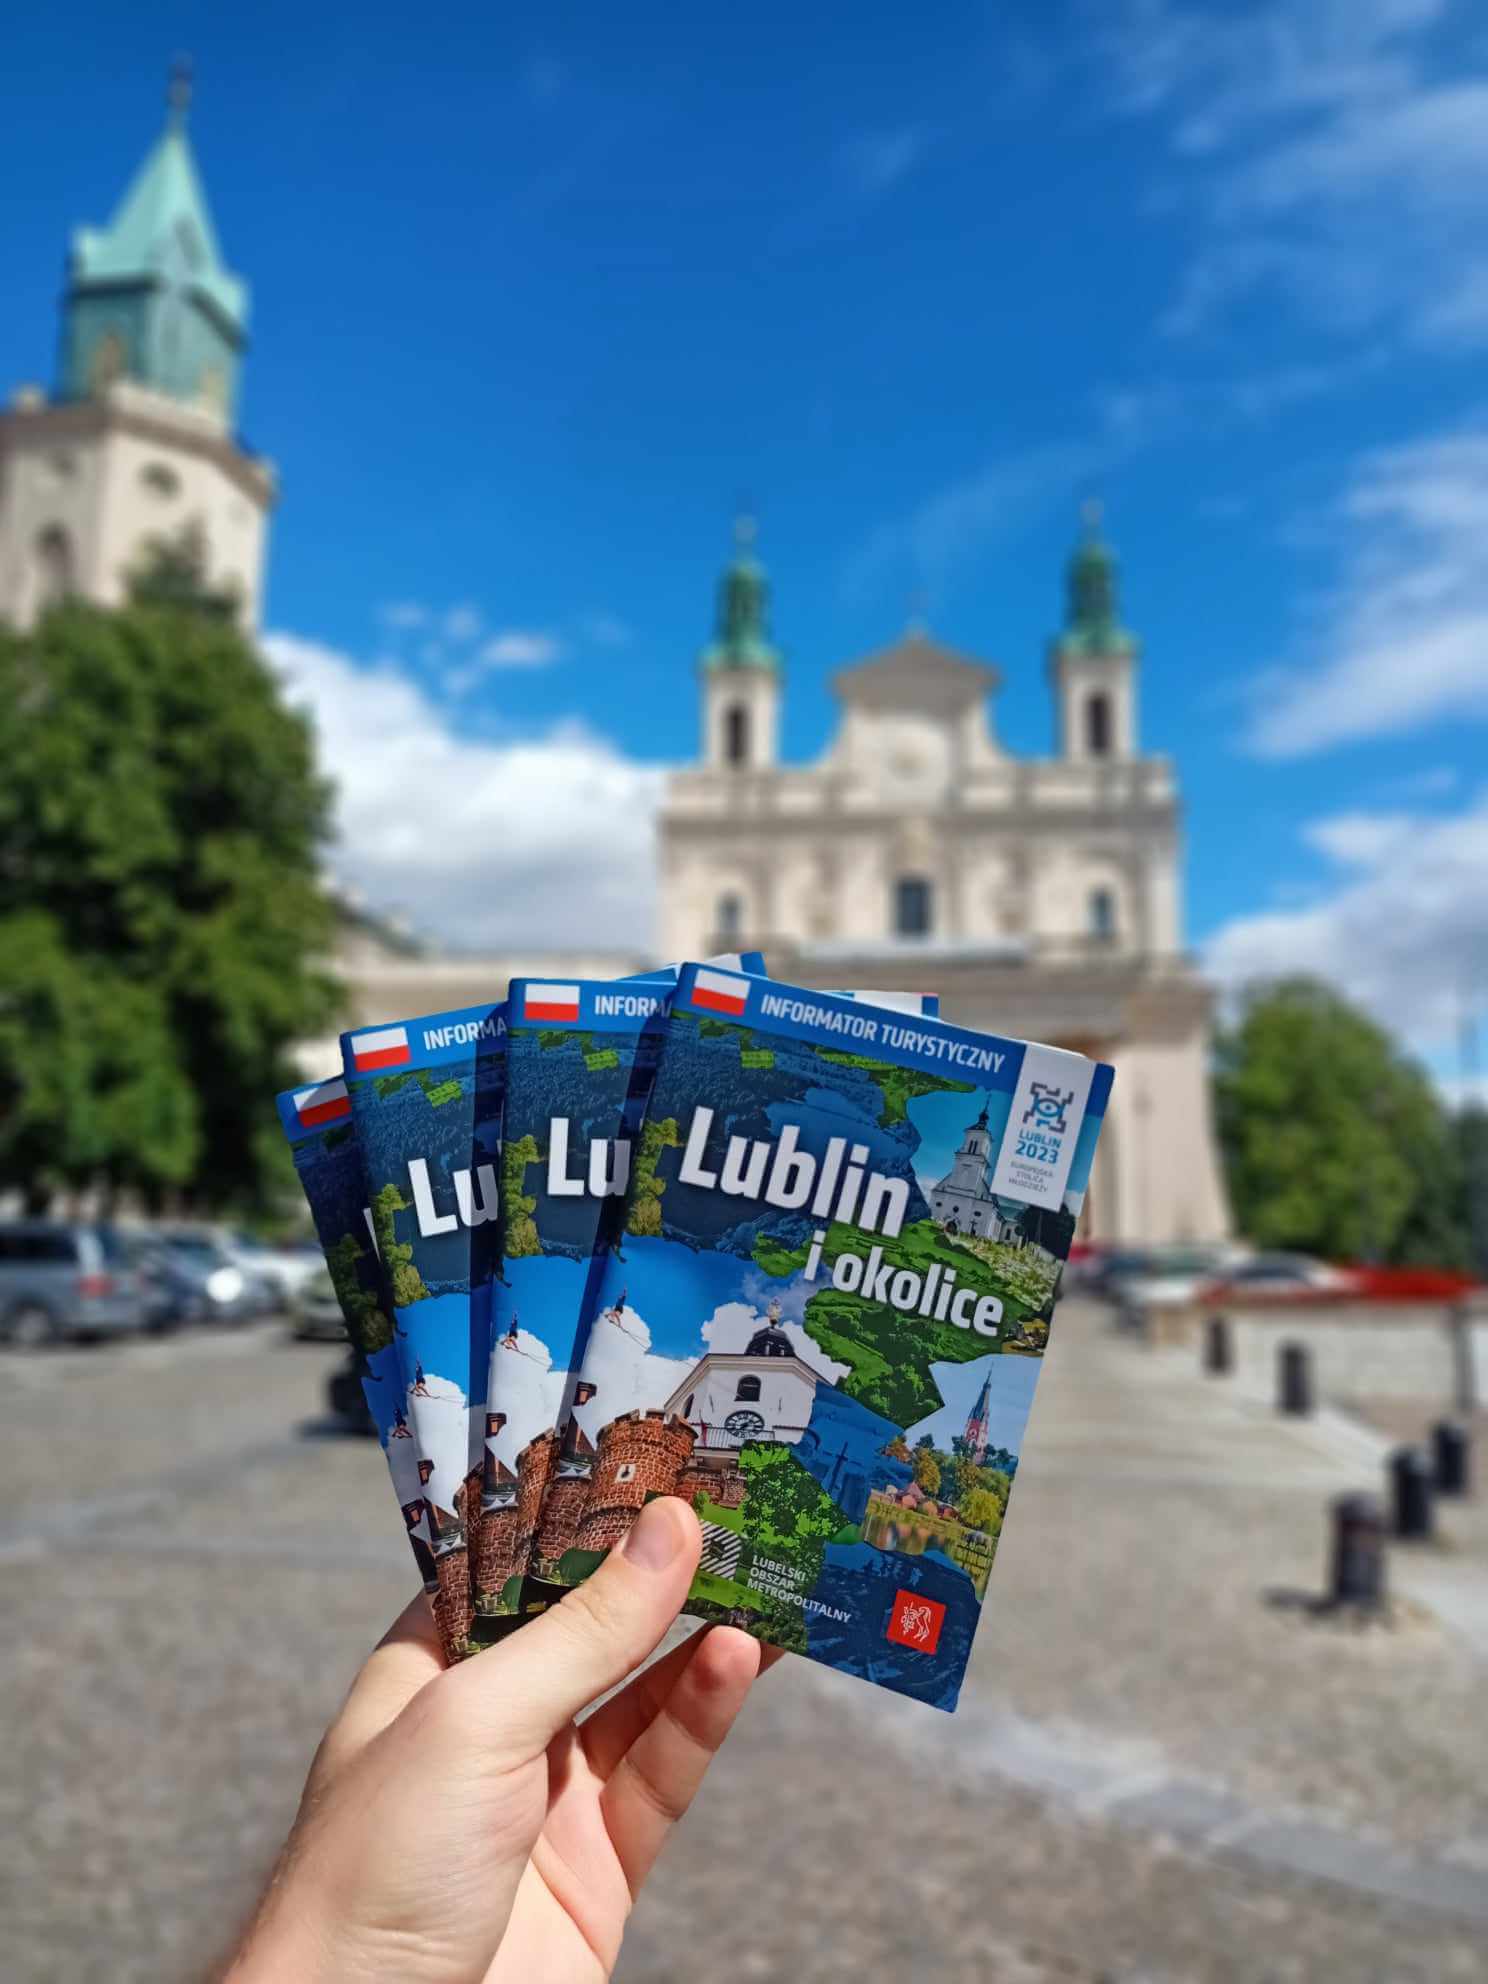 Informator Lublin i okolica na tle katedry